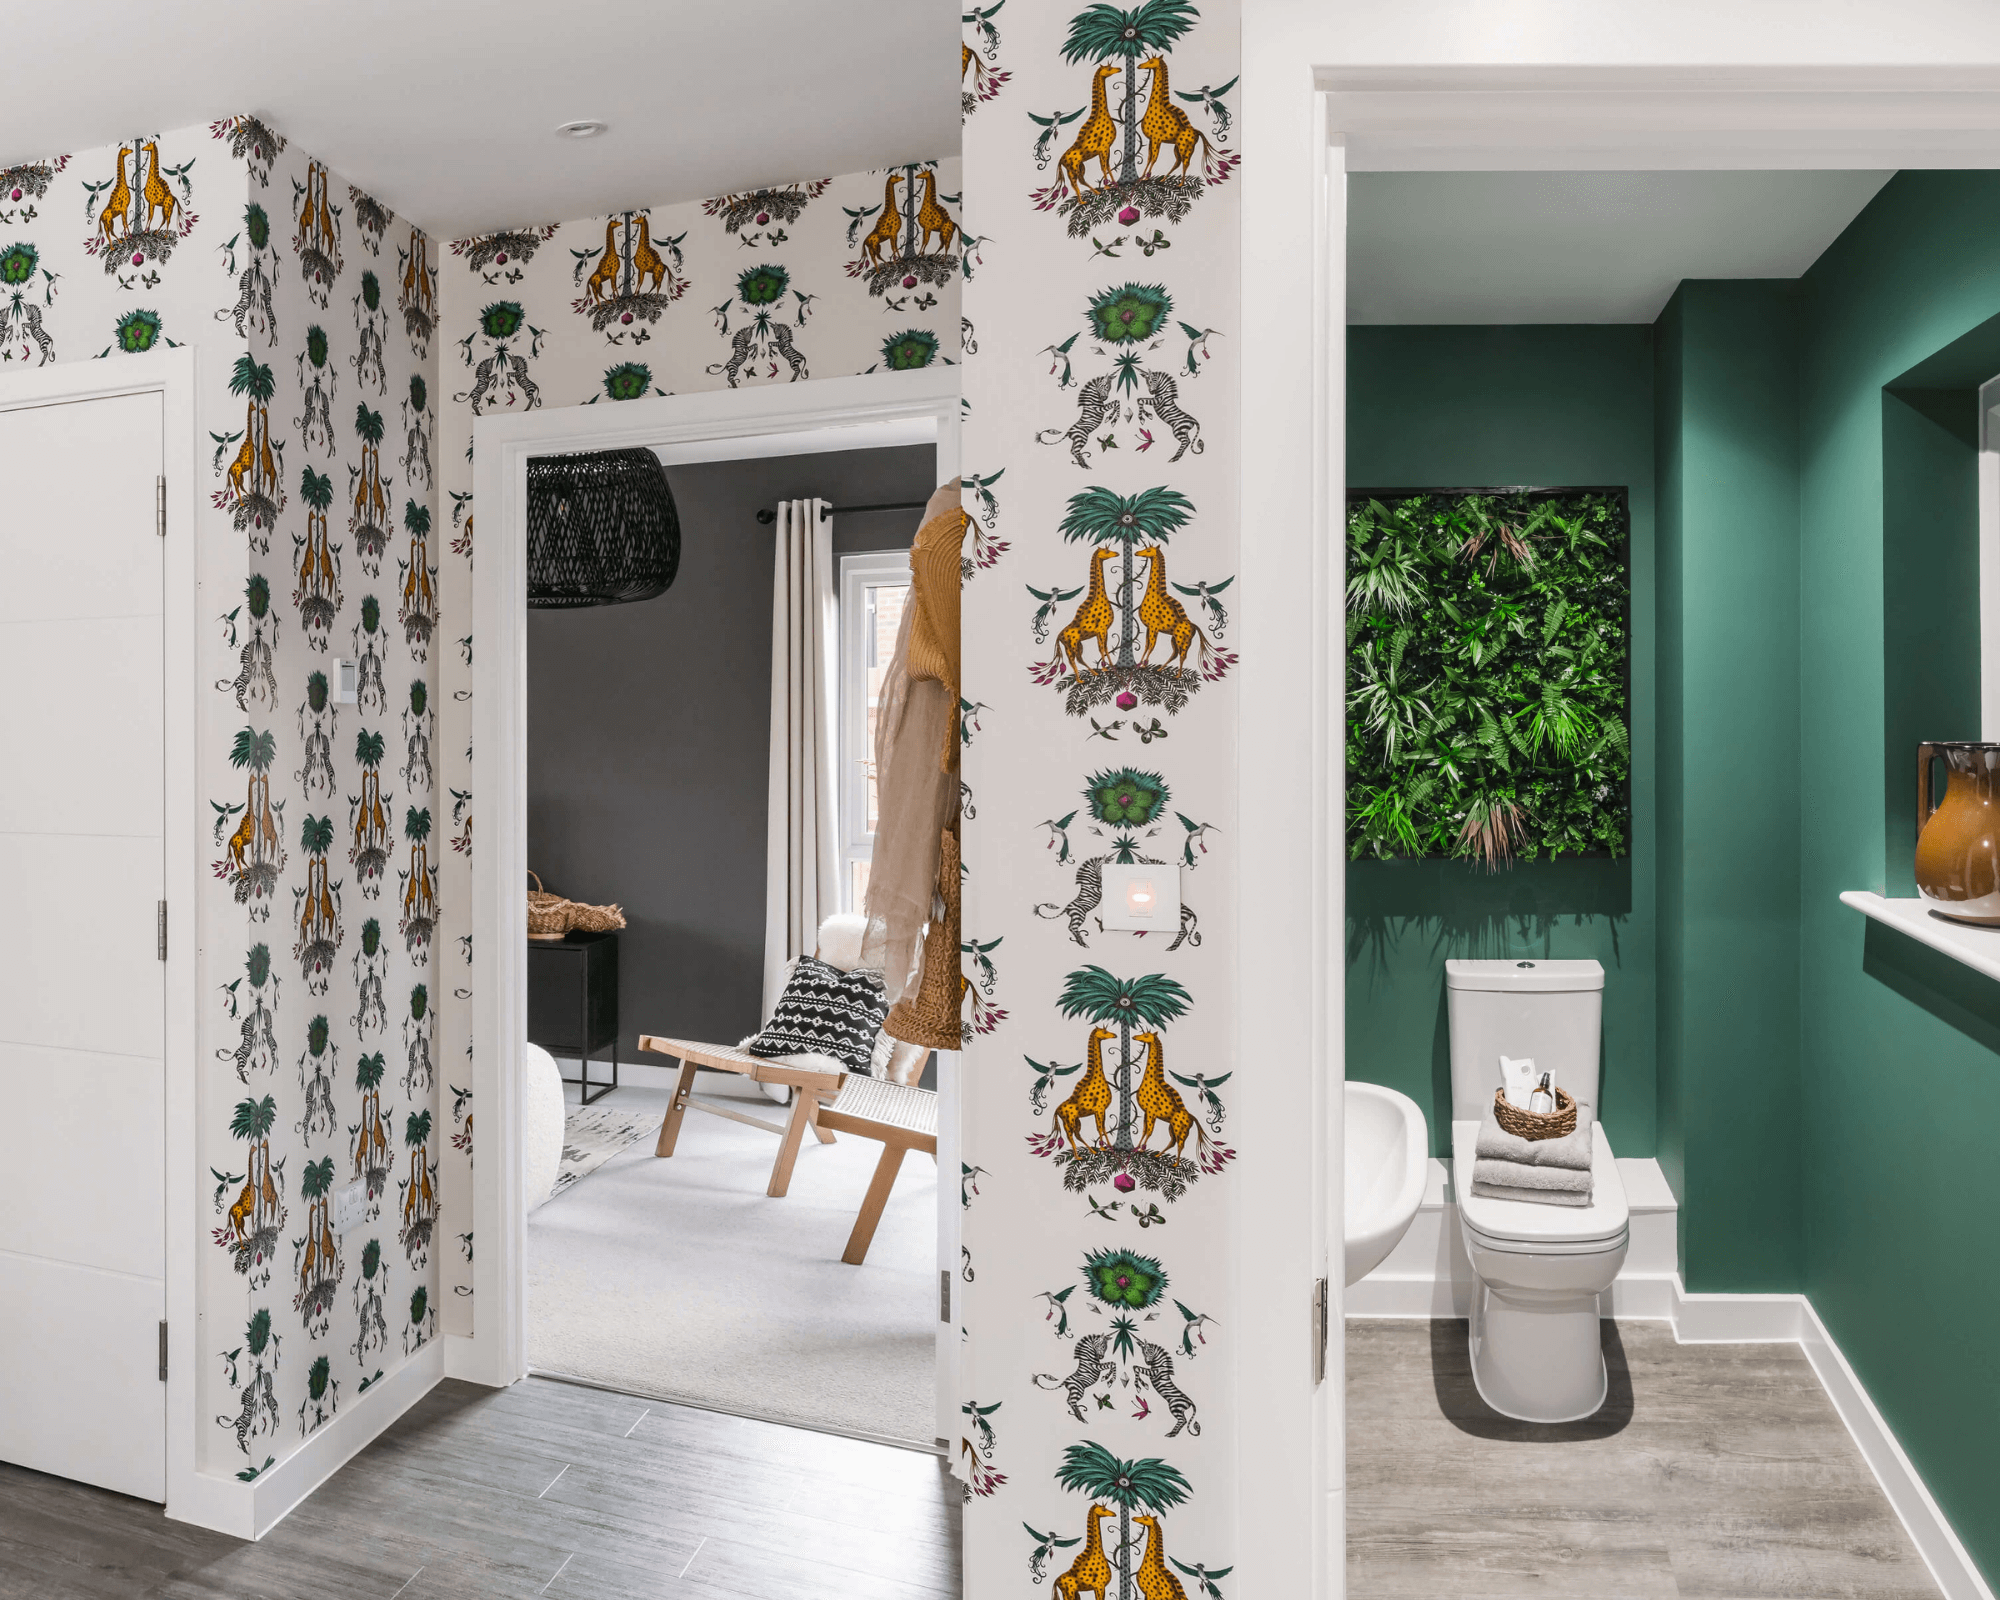 Emma Shipley giraffe wallpaper in downstairs toilet and hallway